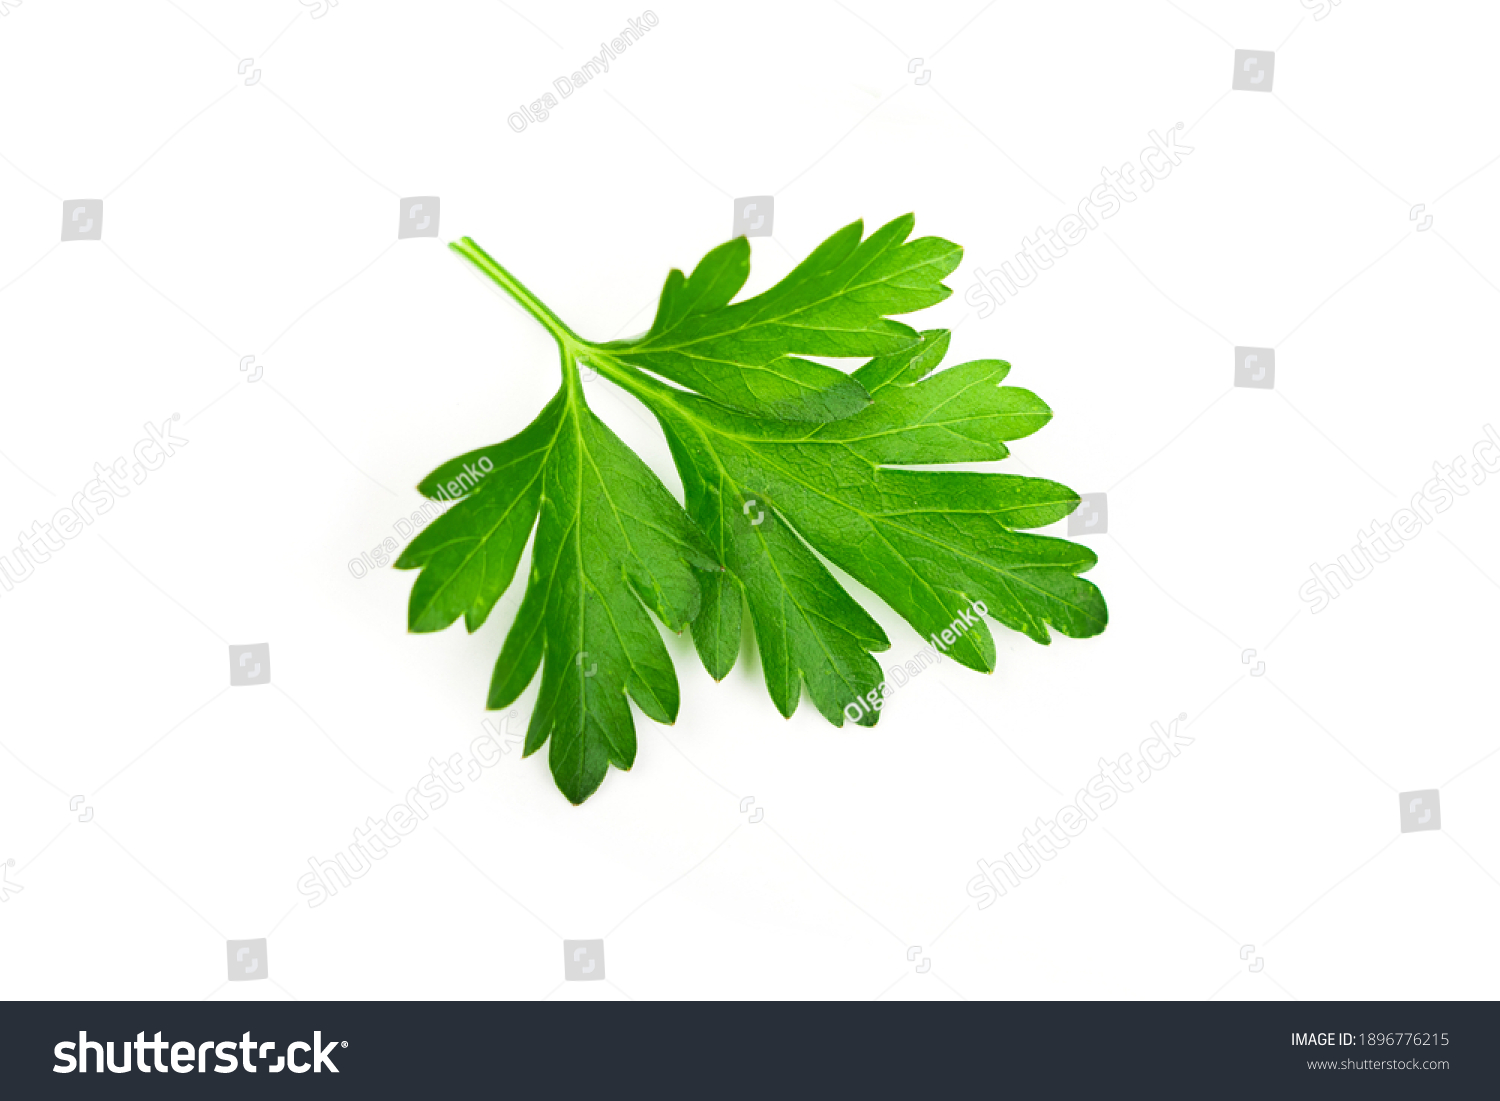 Fresh green vegan vitamin parsley isolated on white background #1896776215